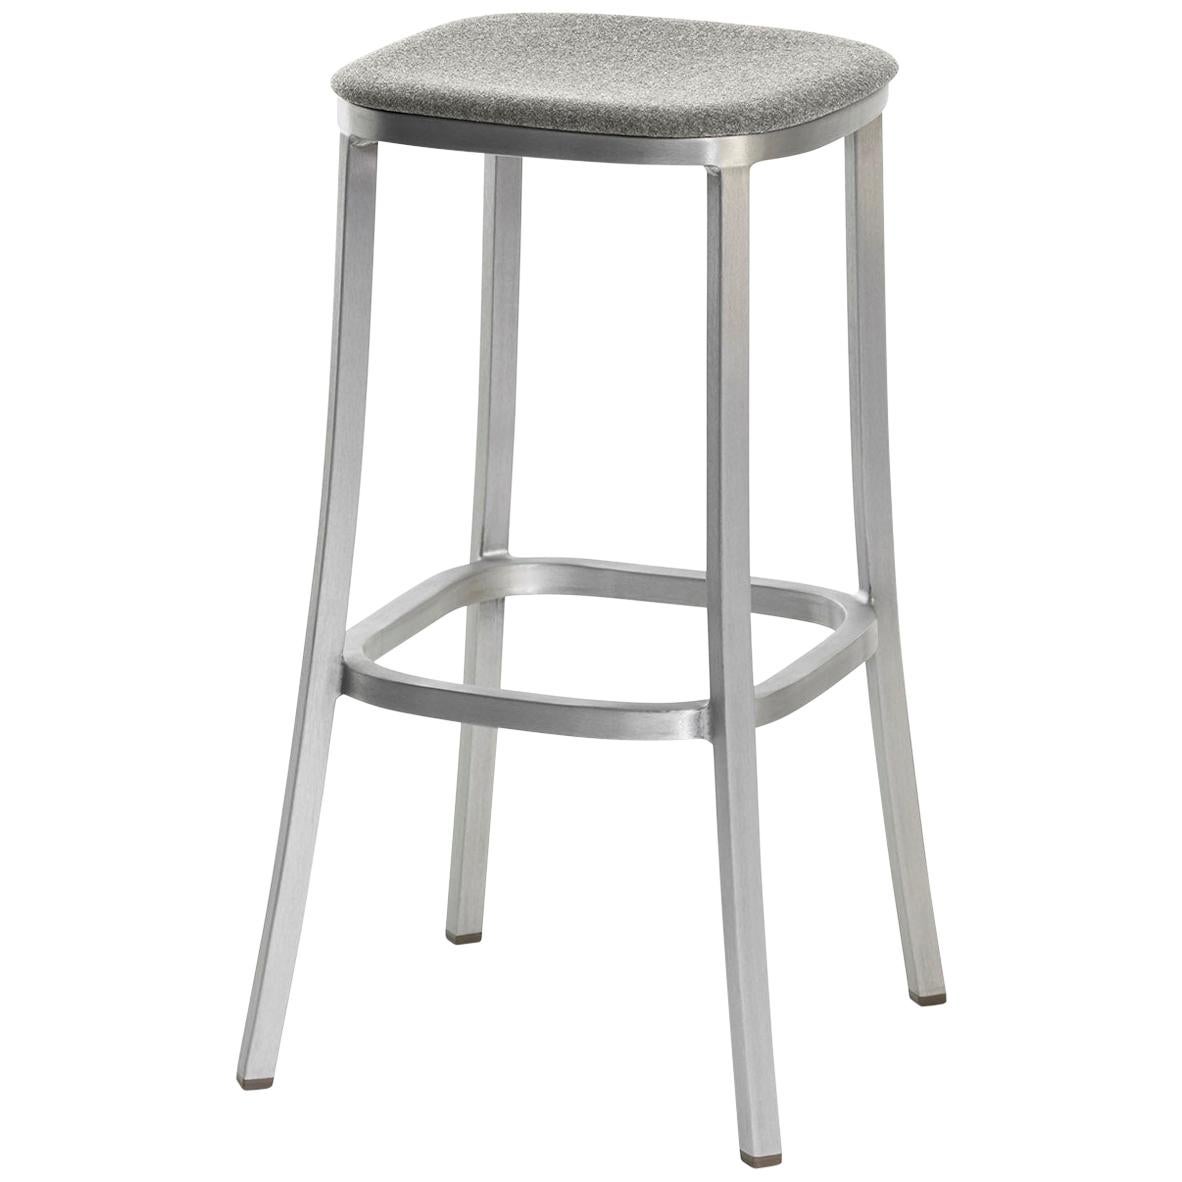 Emeco 1 Inch Barstool with Grey Upholstery & Aluminum Legs by Jasper Morrison